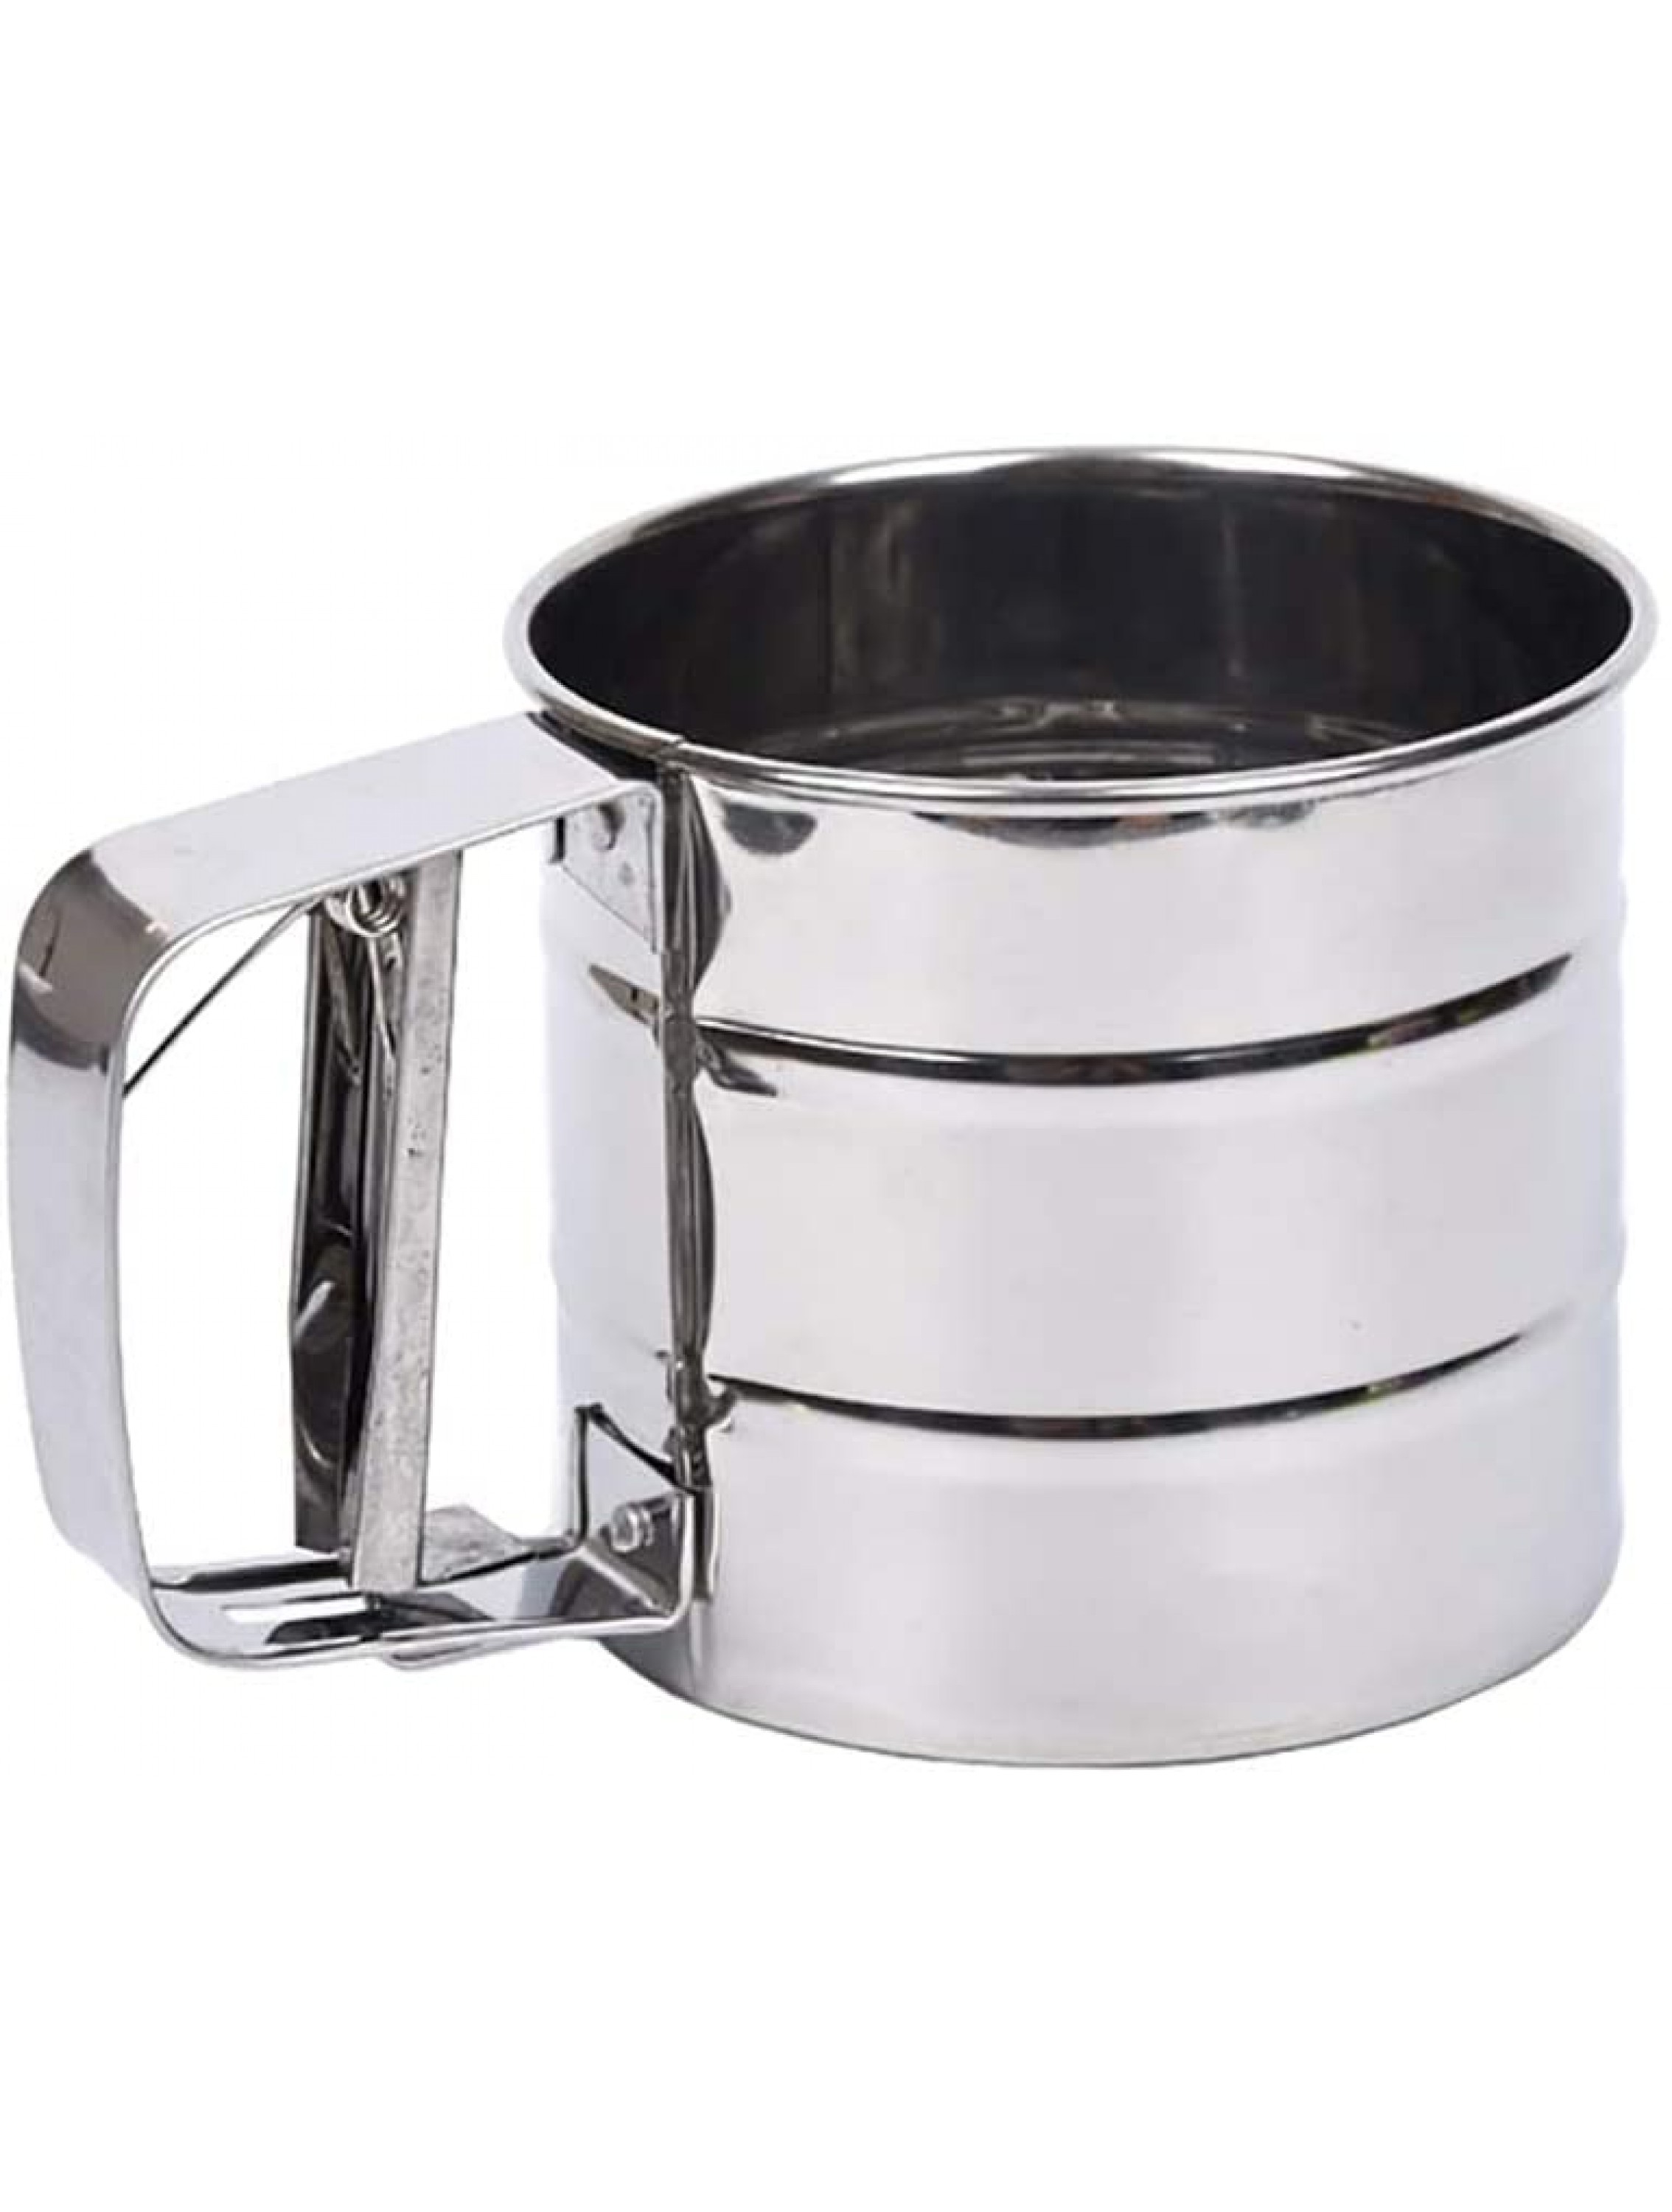 GSHLLO Stainless Steel Handheld Mesh Flour Sieve Shaker Sifter Sieve Cup Baking Tool Accessories - BFMDQP295